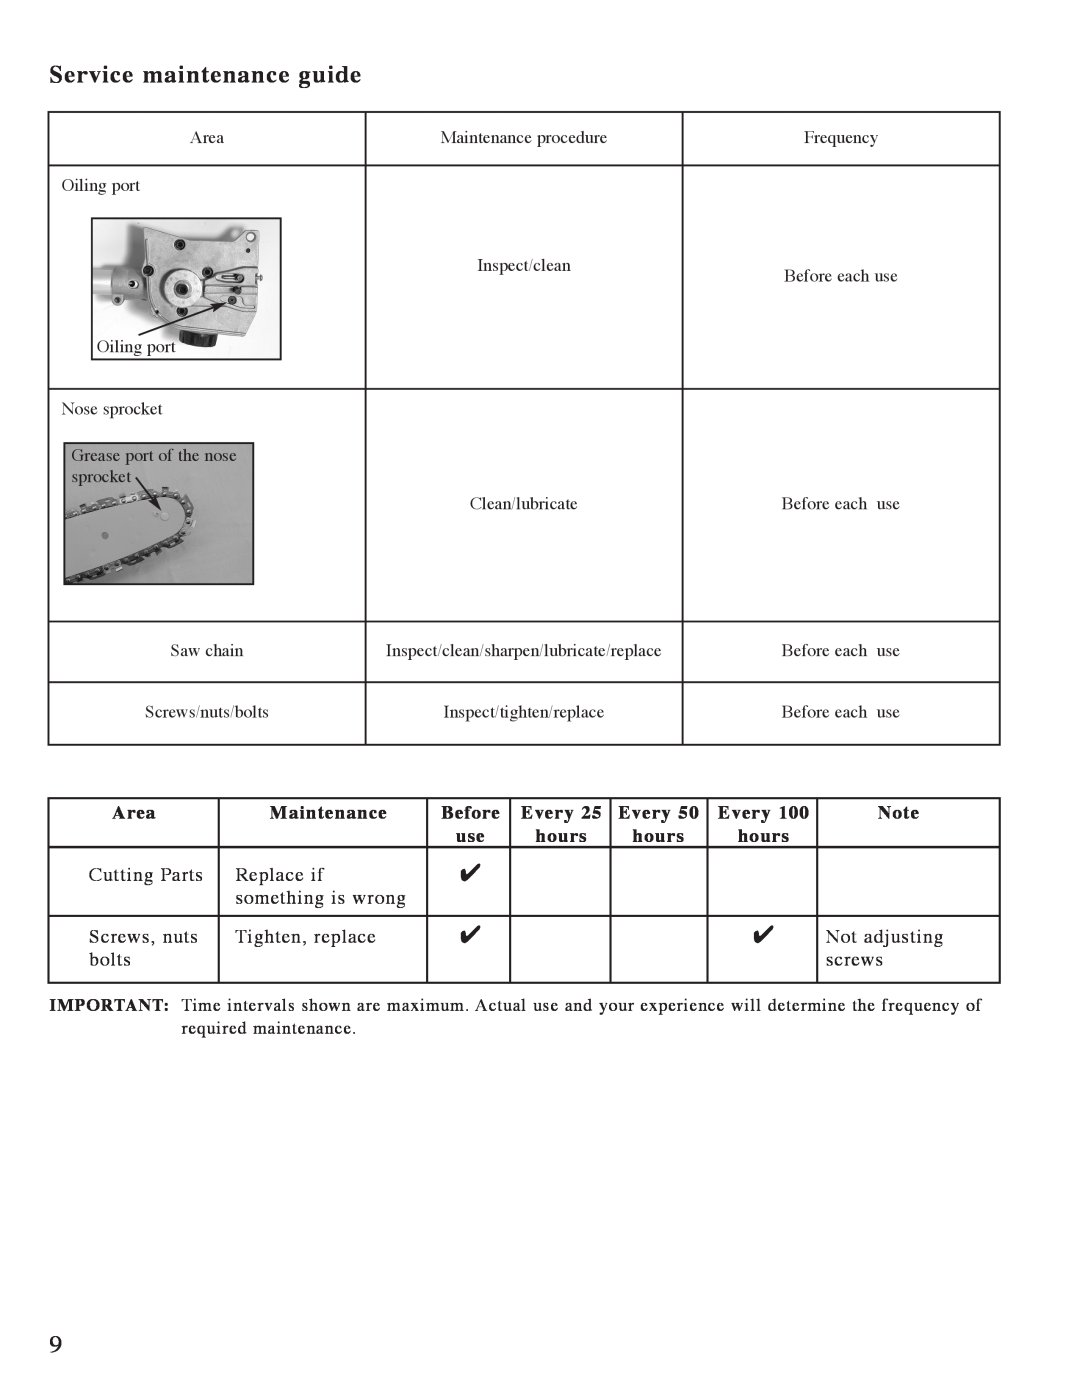 Mantis Pruner E System owner manual Service maintenance guide, Area 